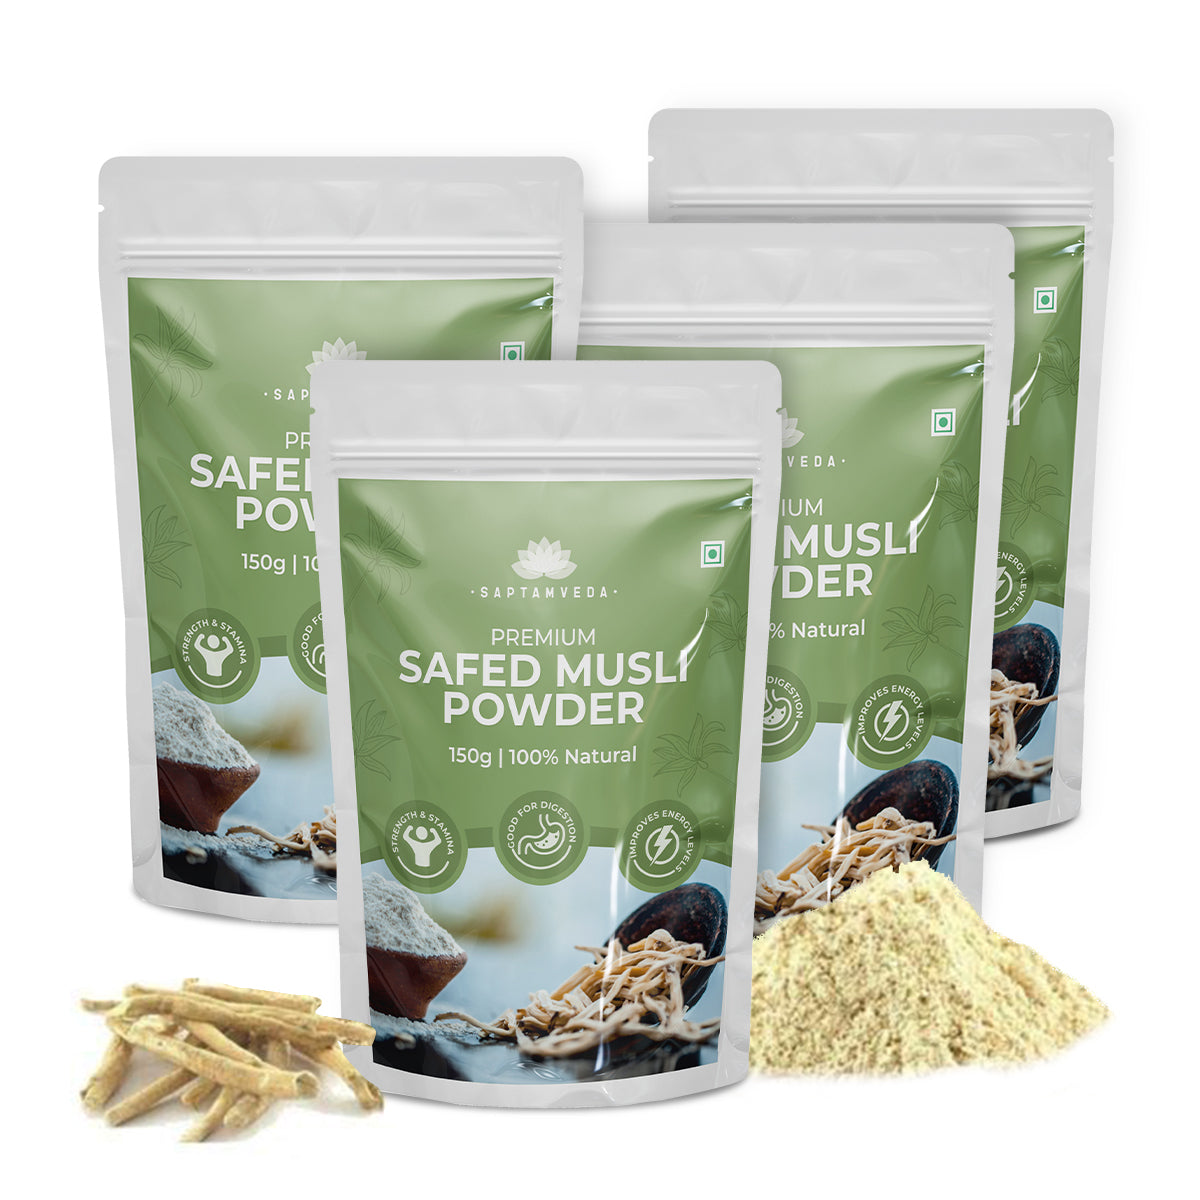 Buy Premium Safed Musli Powder